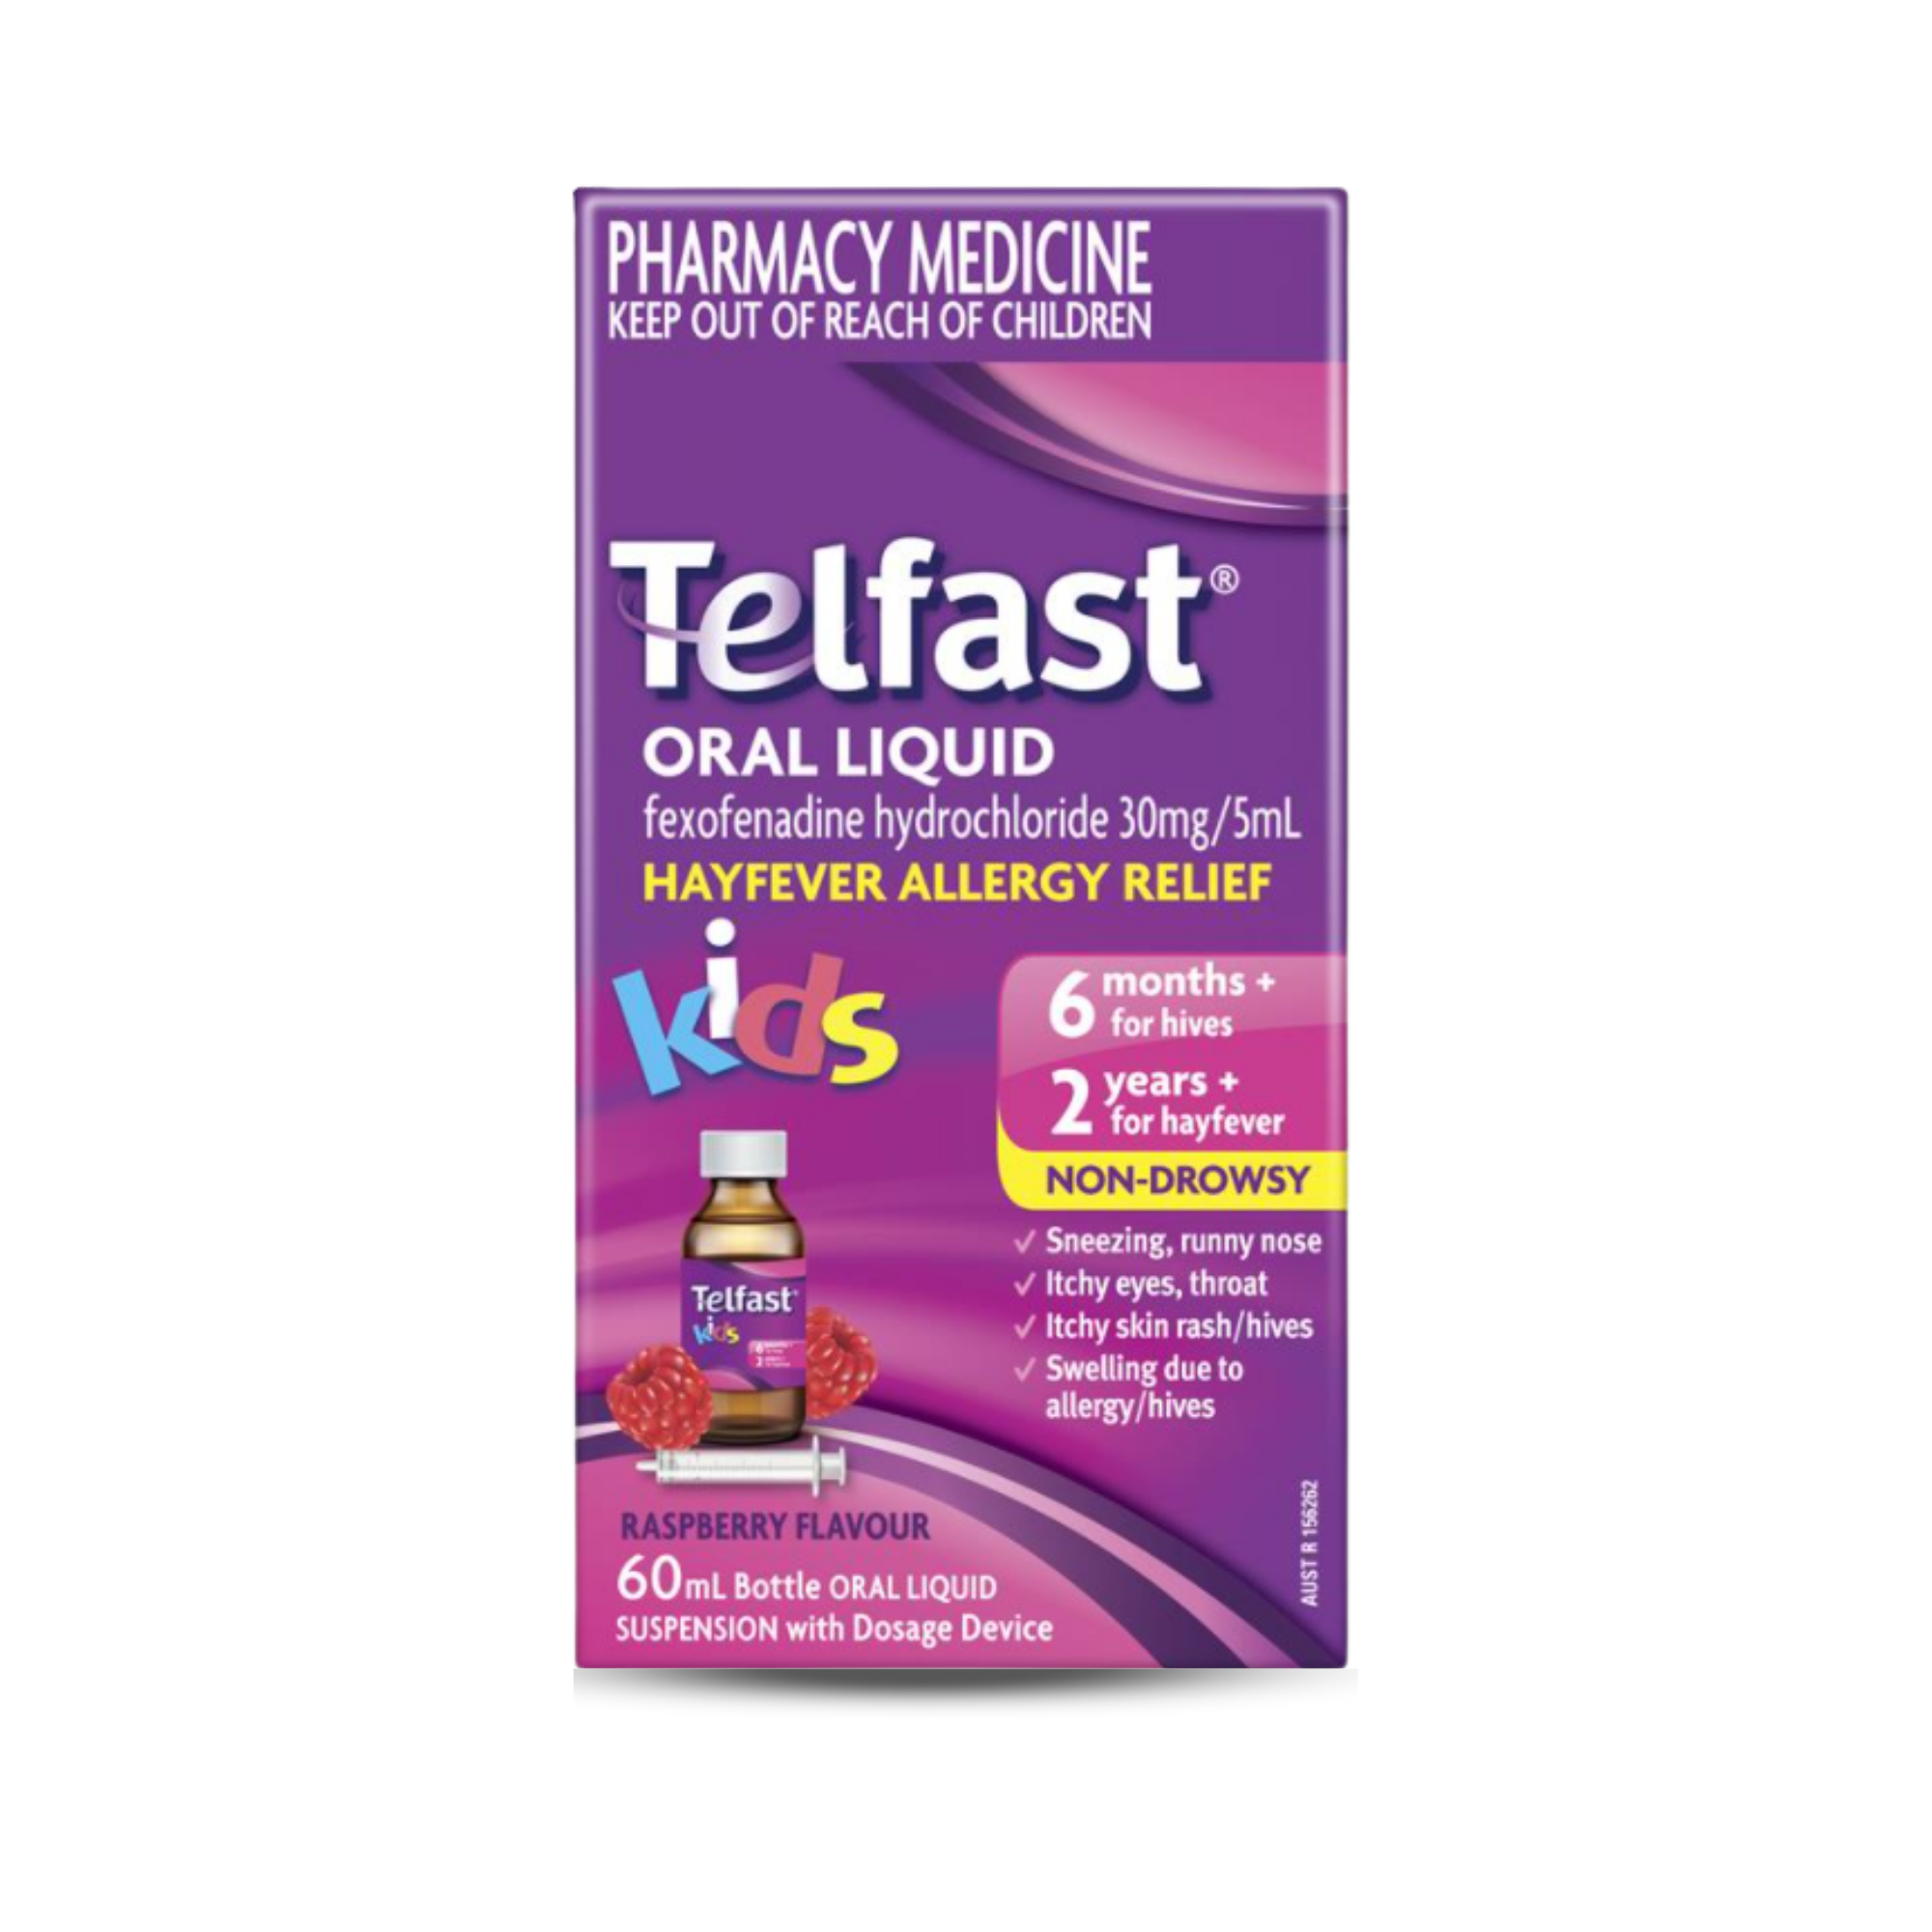 Telfast Oral Liquid for Kids - Hayfever Allergy Relief - Non-Drowsy Antihistamine - 60mL